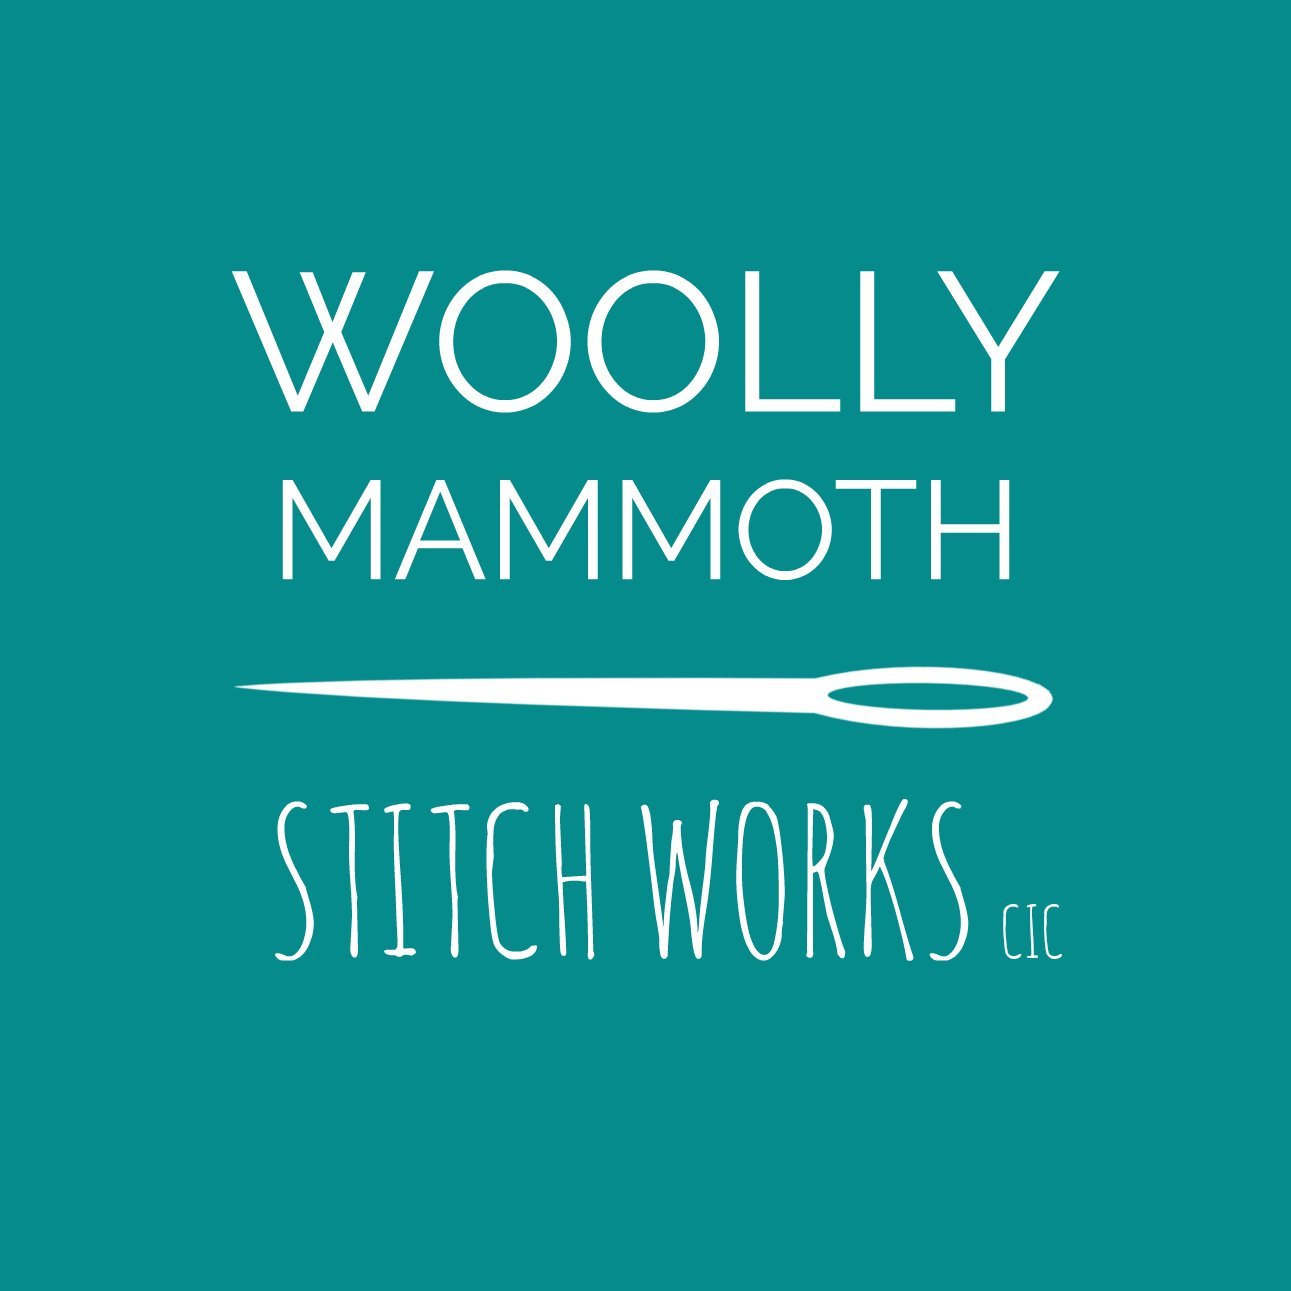 Woolly Mammoth Stitch Works CIC